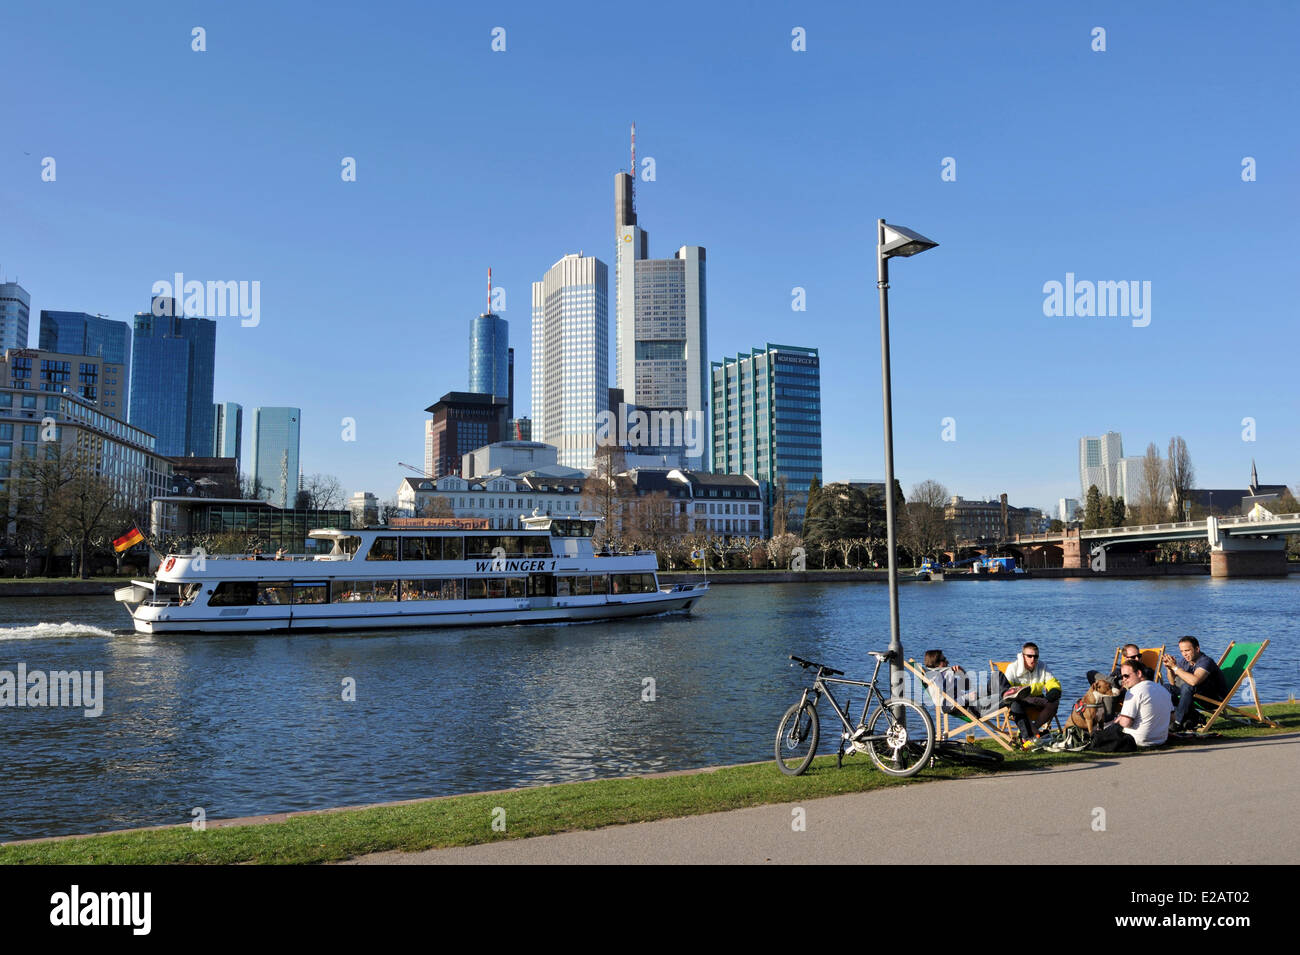 Germany, Hesse, Frankfurt am Main, riverbanks of Main river and skyline Stock Photo